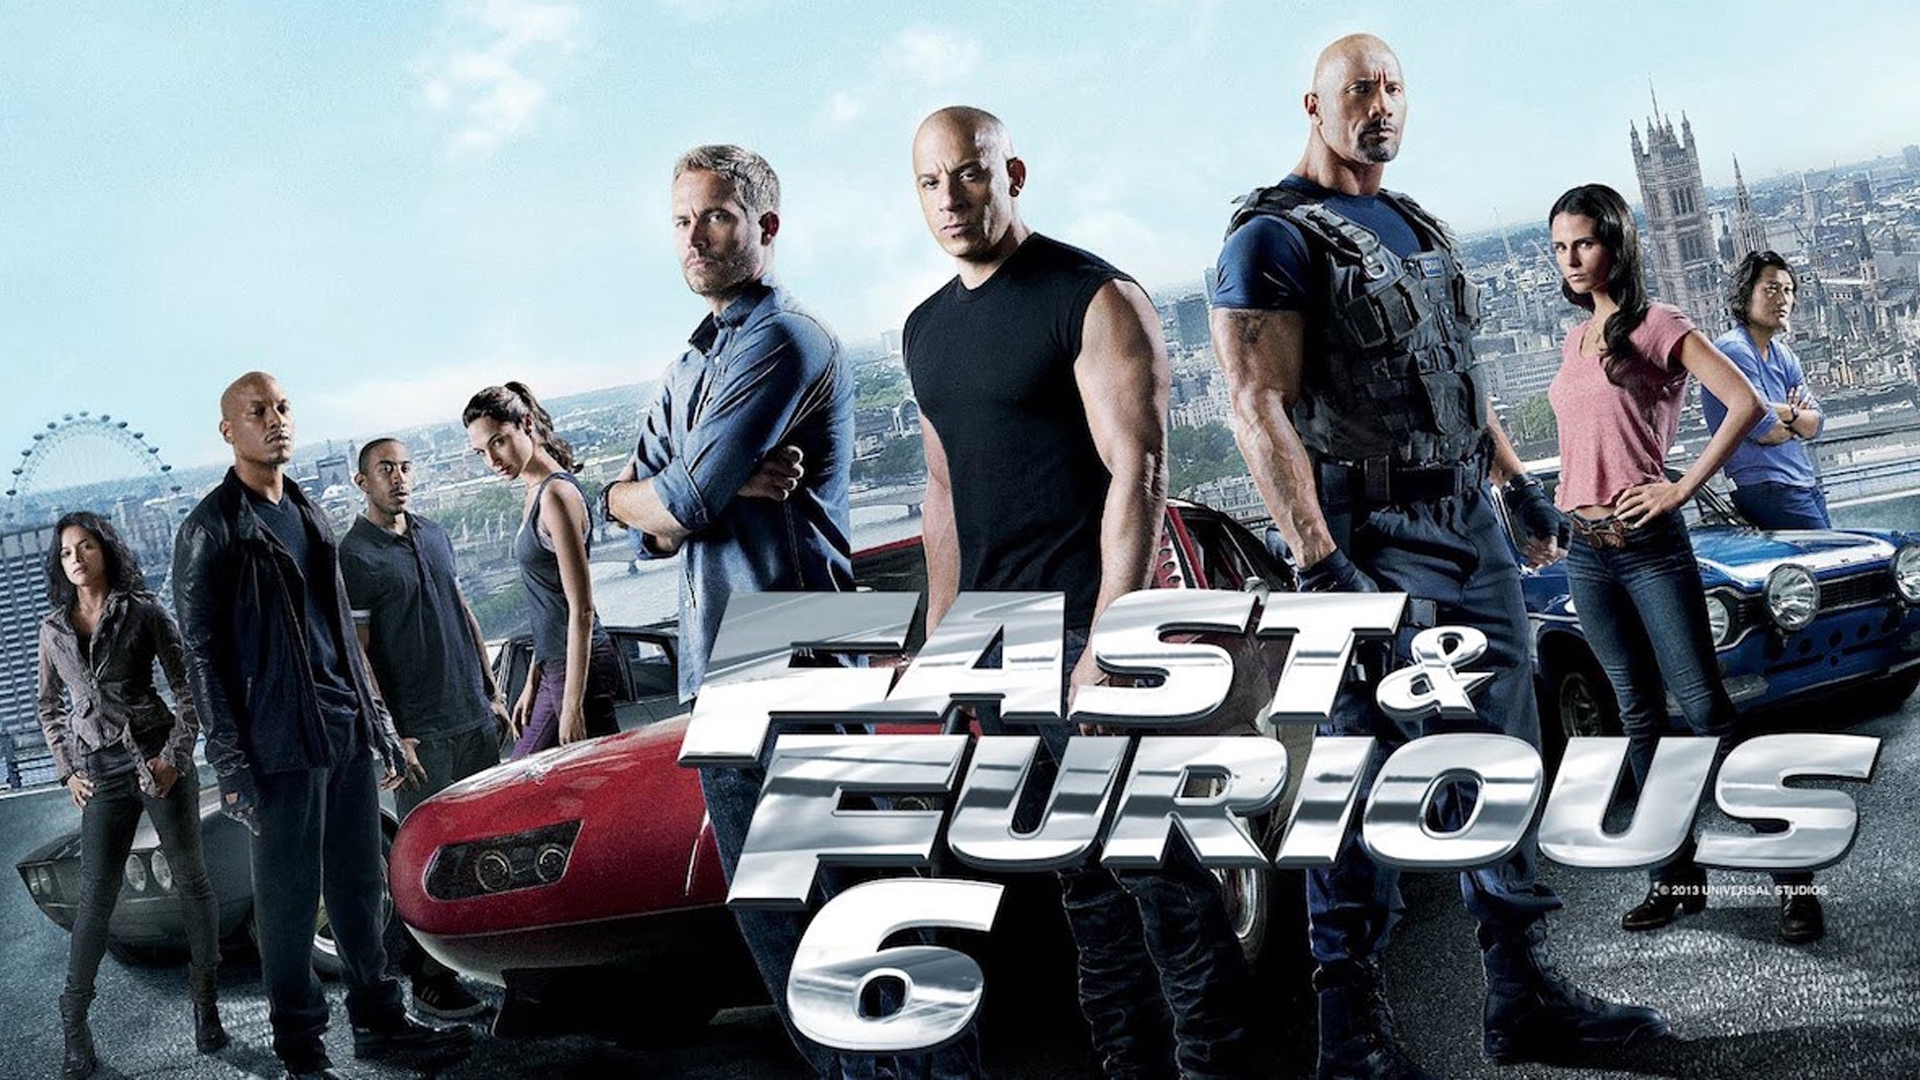 Форсаж на английском название. Форсаж 6 (2013) Furious 6. Форсаж 6 fast & Furious 6 2013 Постер. Форсаж 6 2013 Постер.